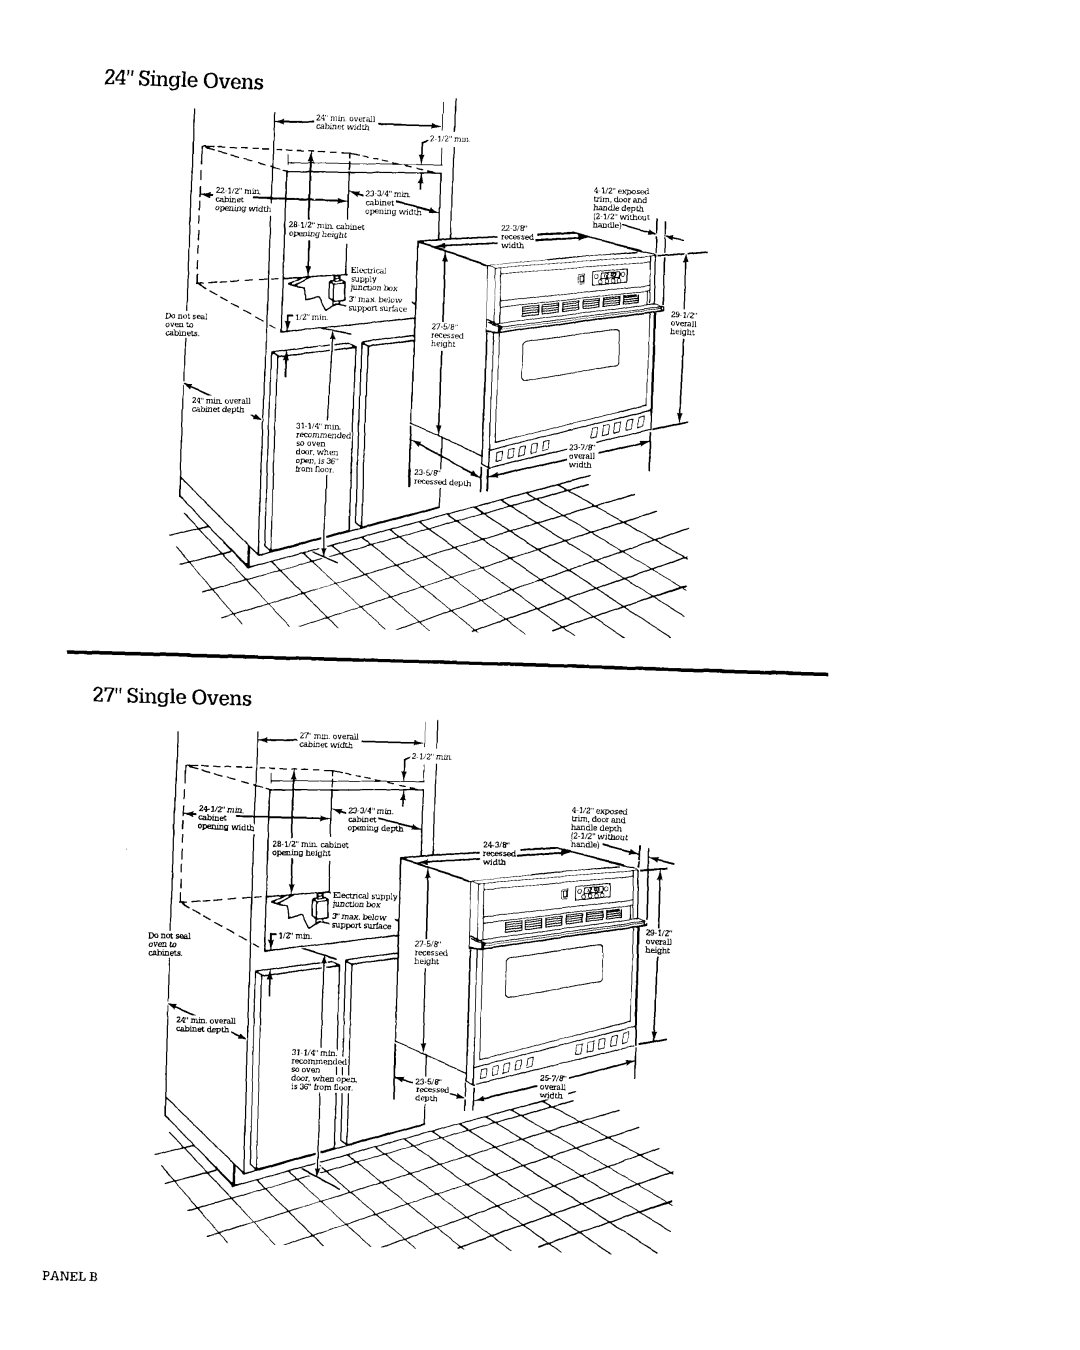 Roper Double Oven manual Single Ovens Single Ovens, 24” 27”, Panel B 